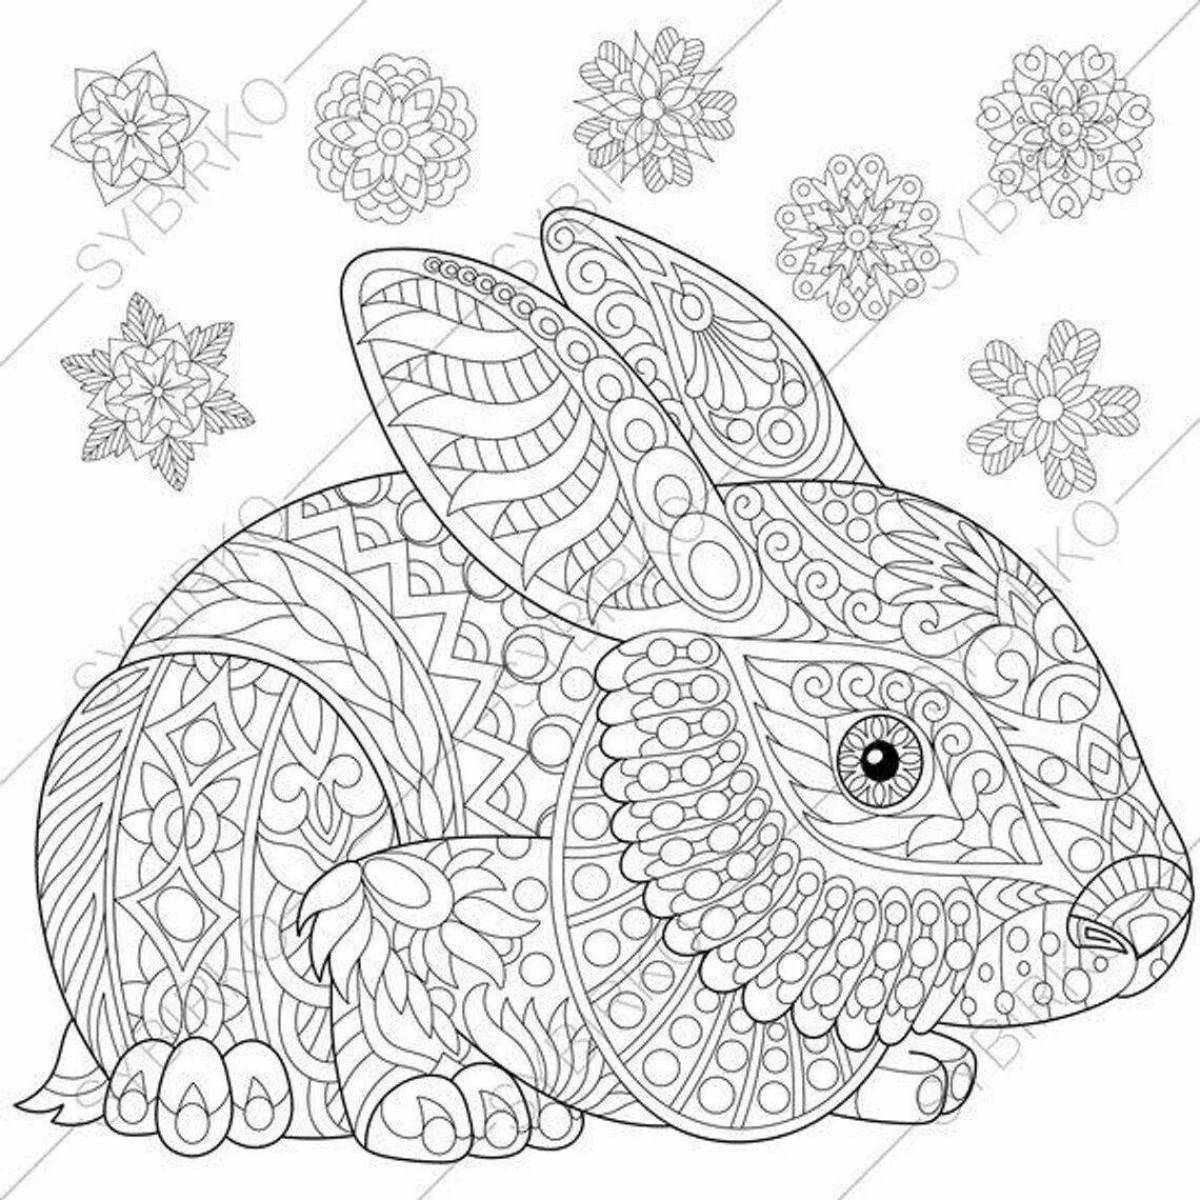 Charming bunny antistress coloring book